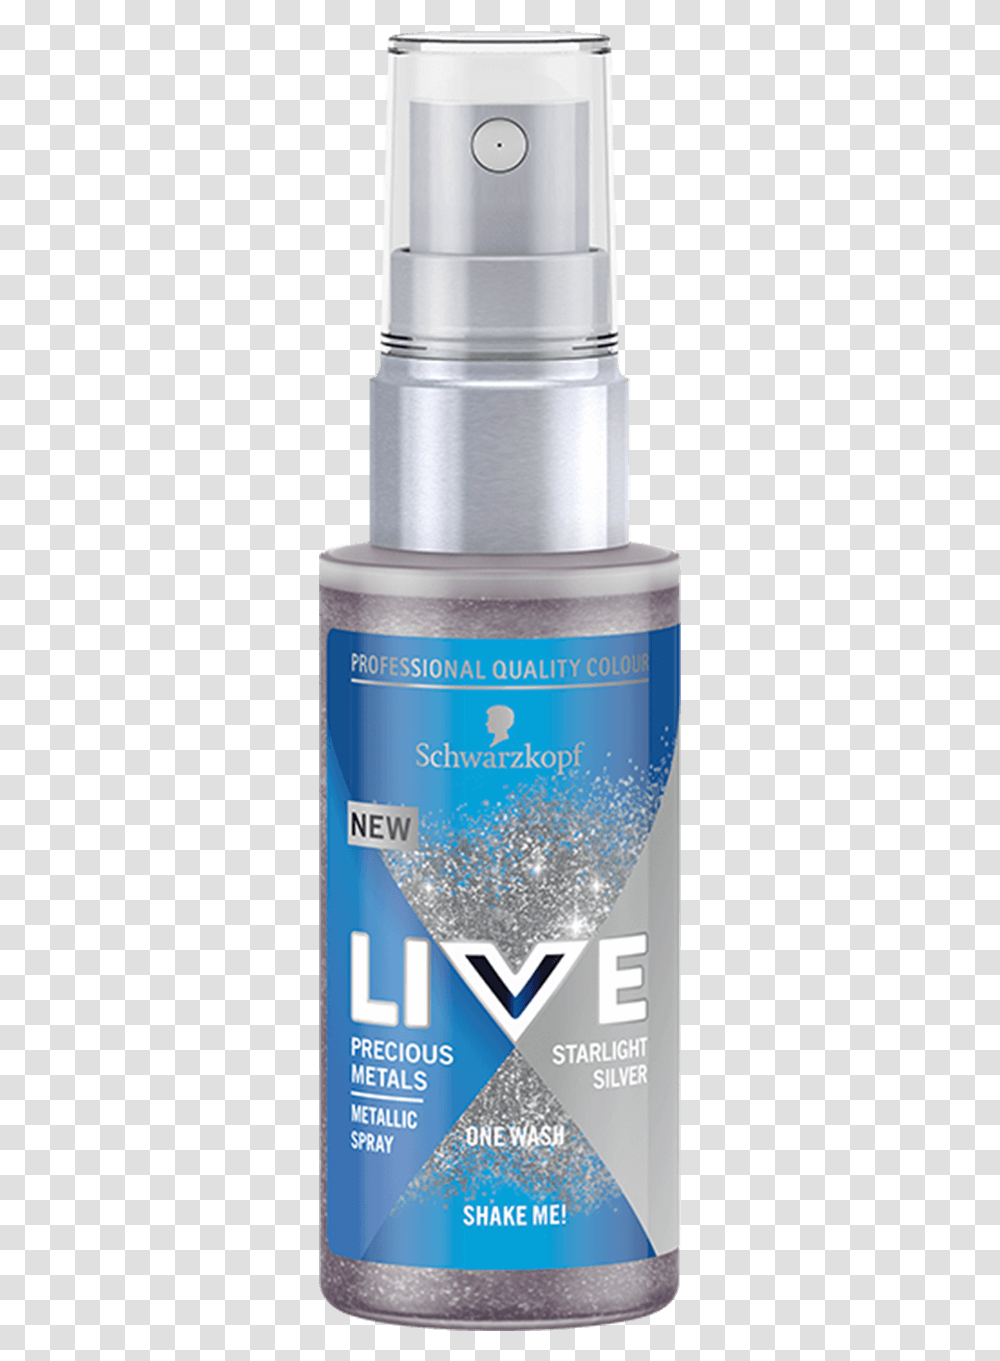 Live Color Uk Precious Metals Spray Starlight Silver, Cosmetics, Shaker, Bottle, Deodorant Transparent Png